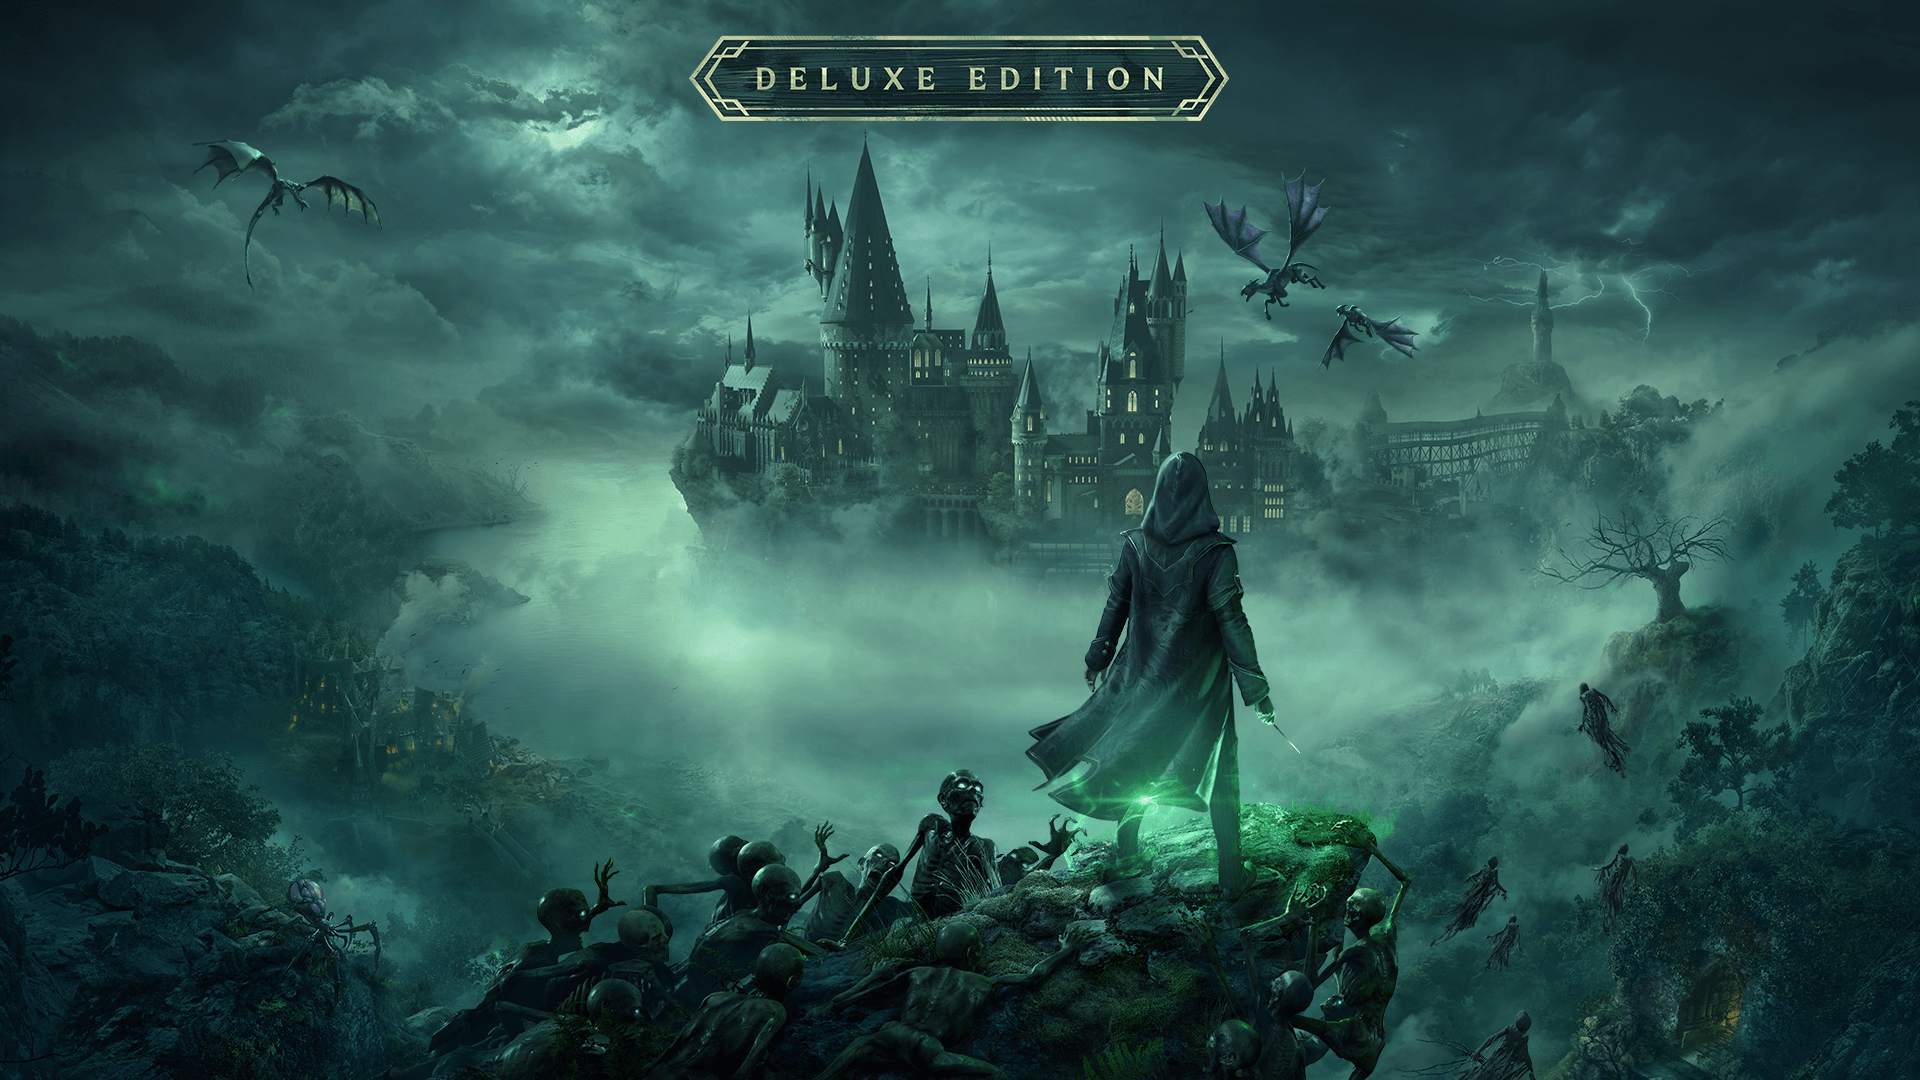 Comprar Hogwarts Legacy Deluxe Edition Steam